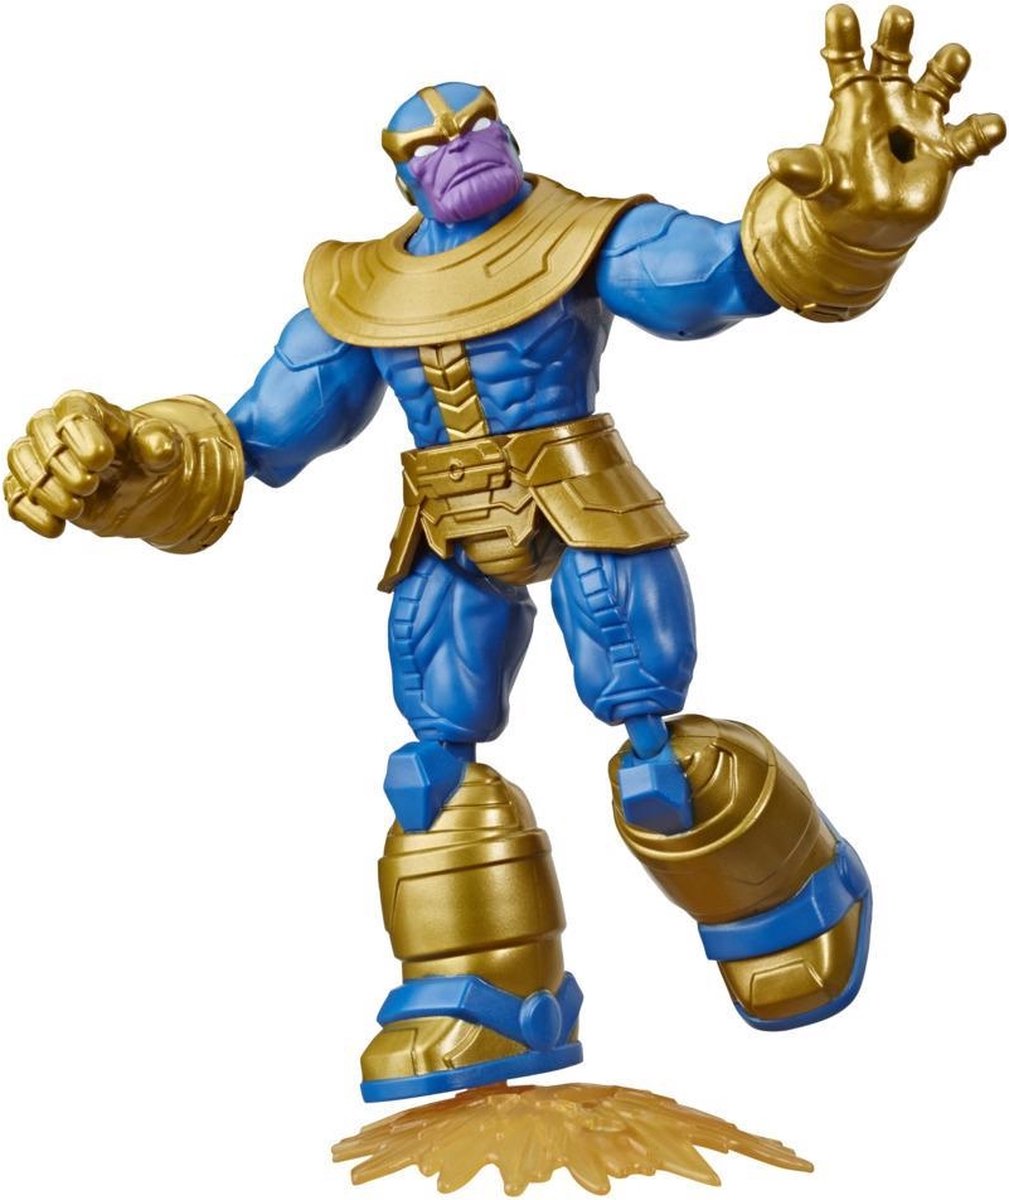 Marvel Avengers Bend and Flex Thanos  - Speelfiguur 15cm - Marvel